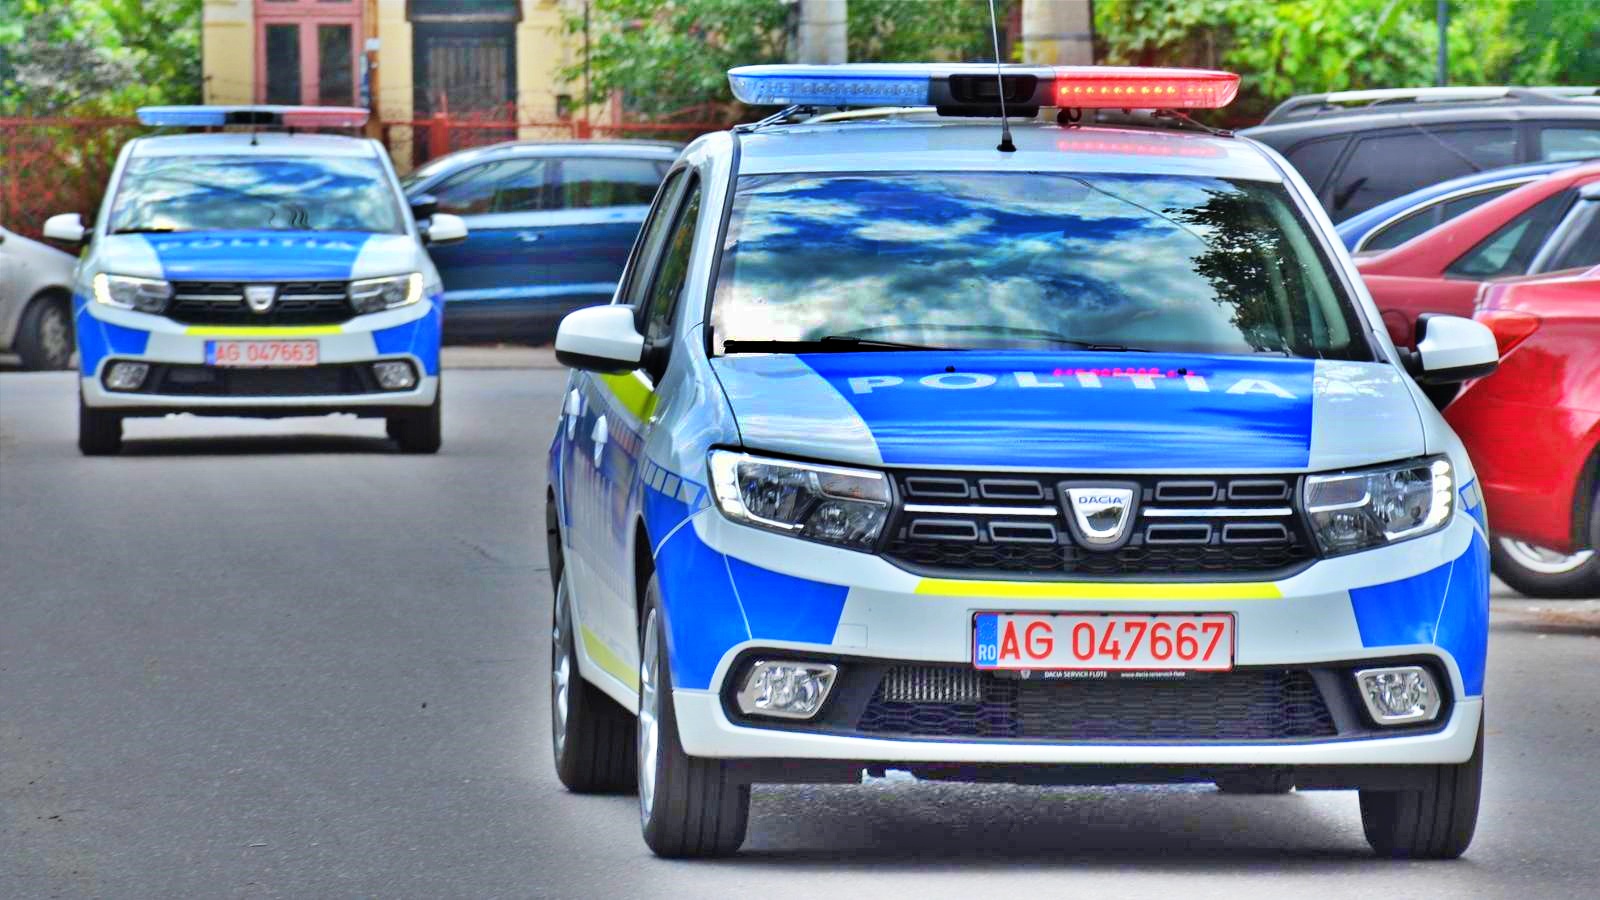 Politia Romana VIDEO USOR Hotii Fure Obiectele Autobuze